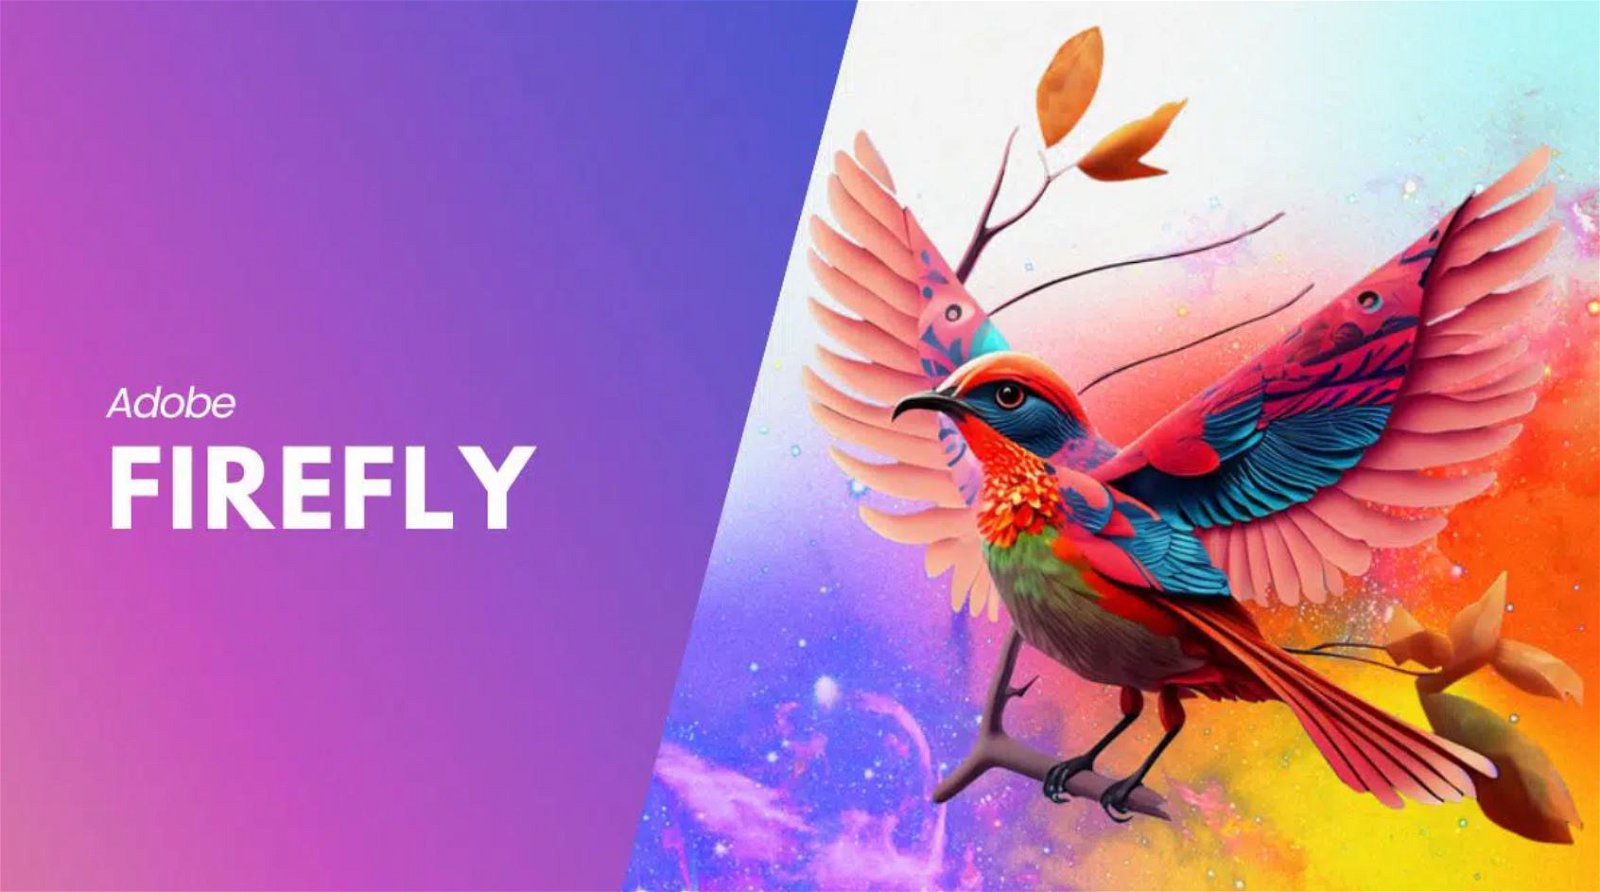 Adobe Unveils Firefly Image 3, Its Most Advanced Image Generation Model Yet image